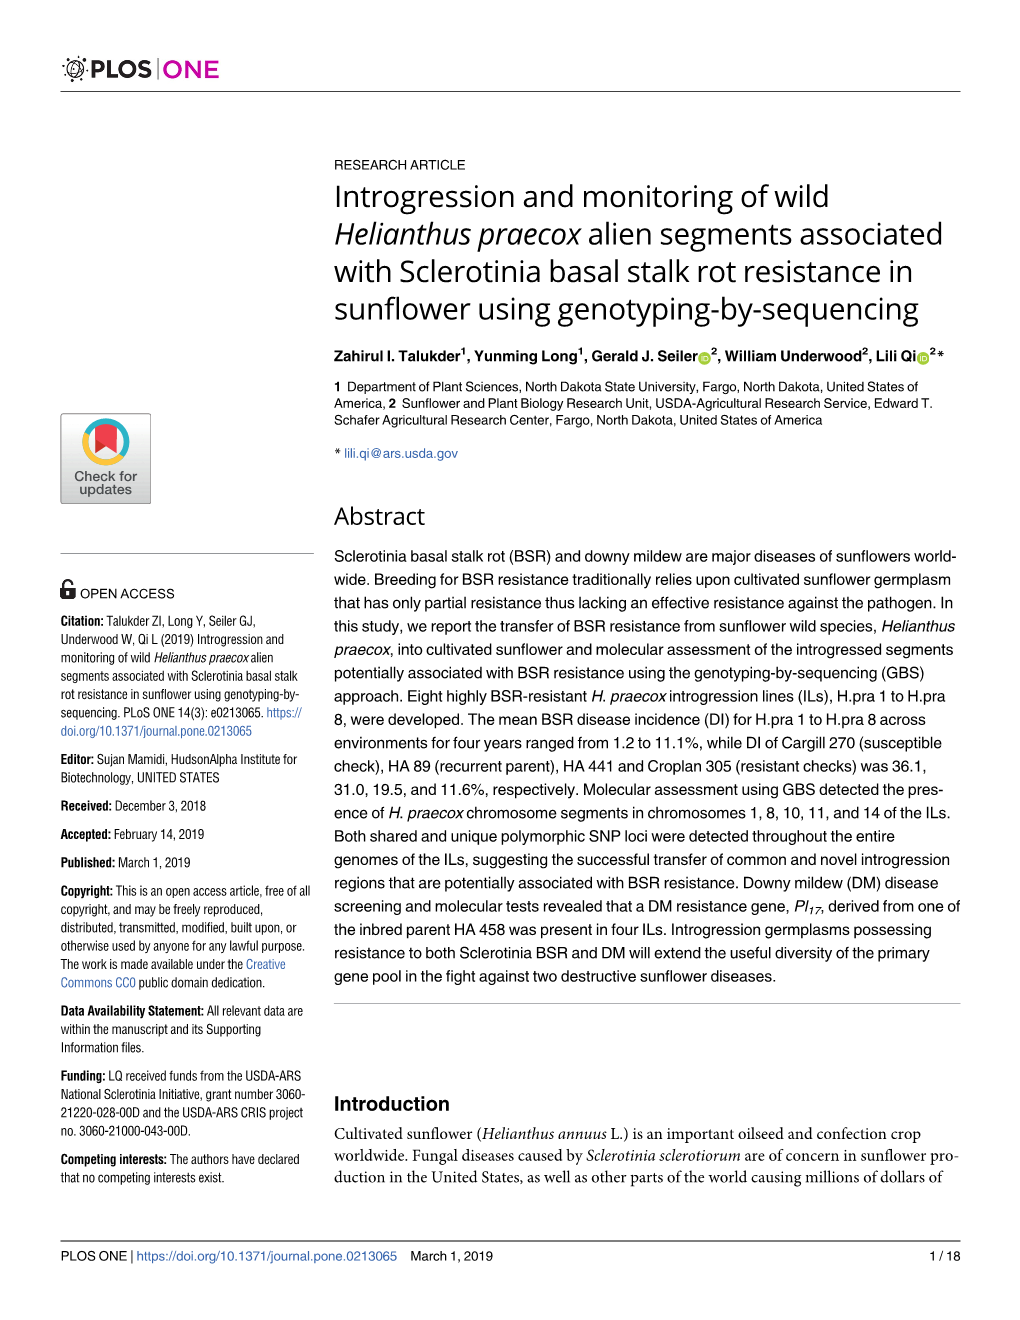 Introgression and Monitoring of Wild Helianthus Praecox Alien Segments